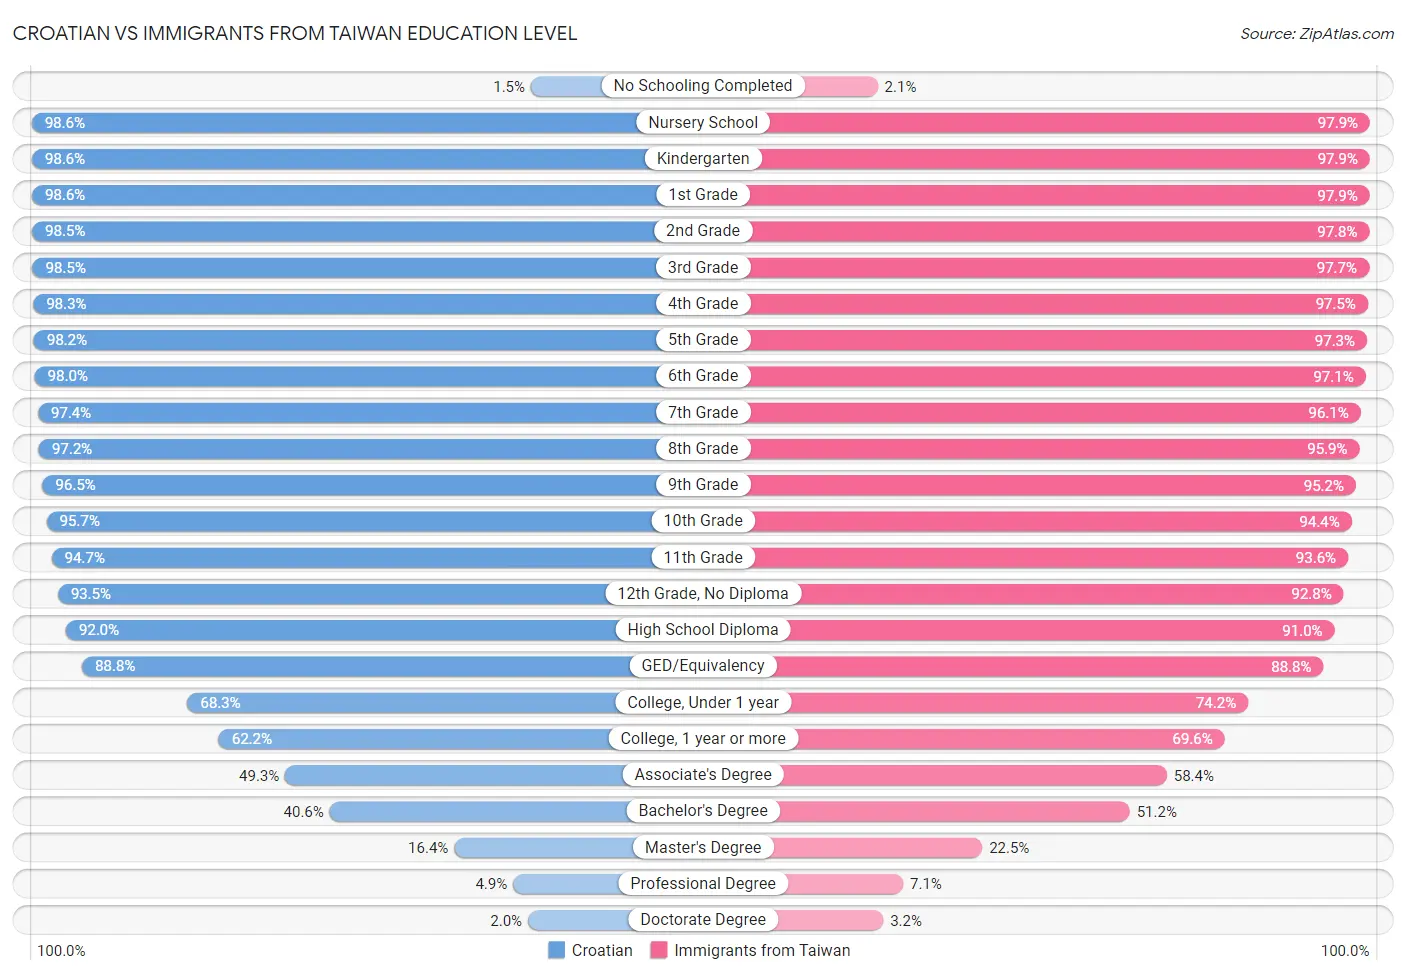 Croatian vs Immigrants from Taiwan Education Level